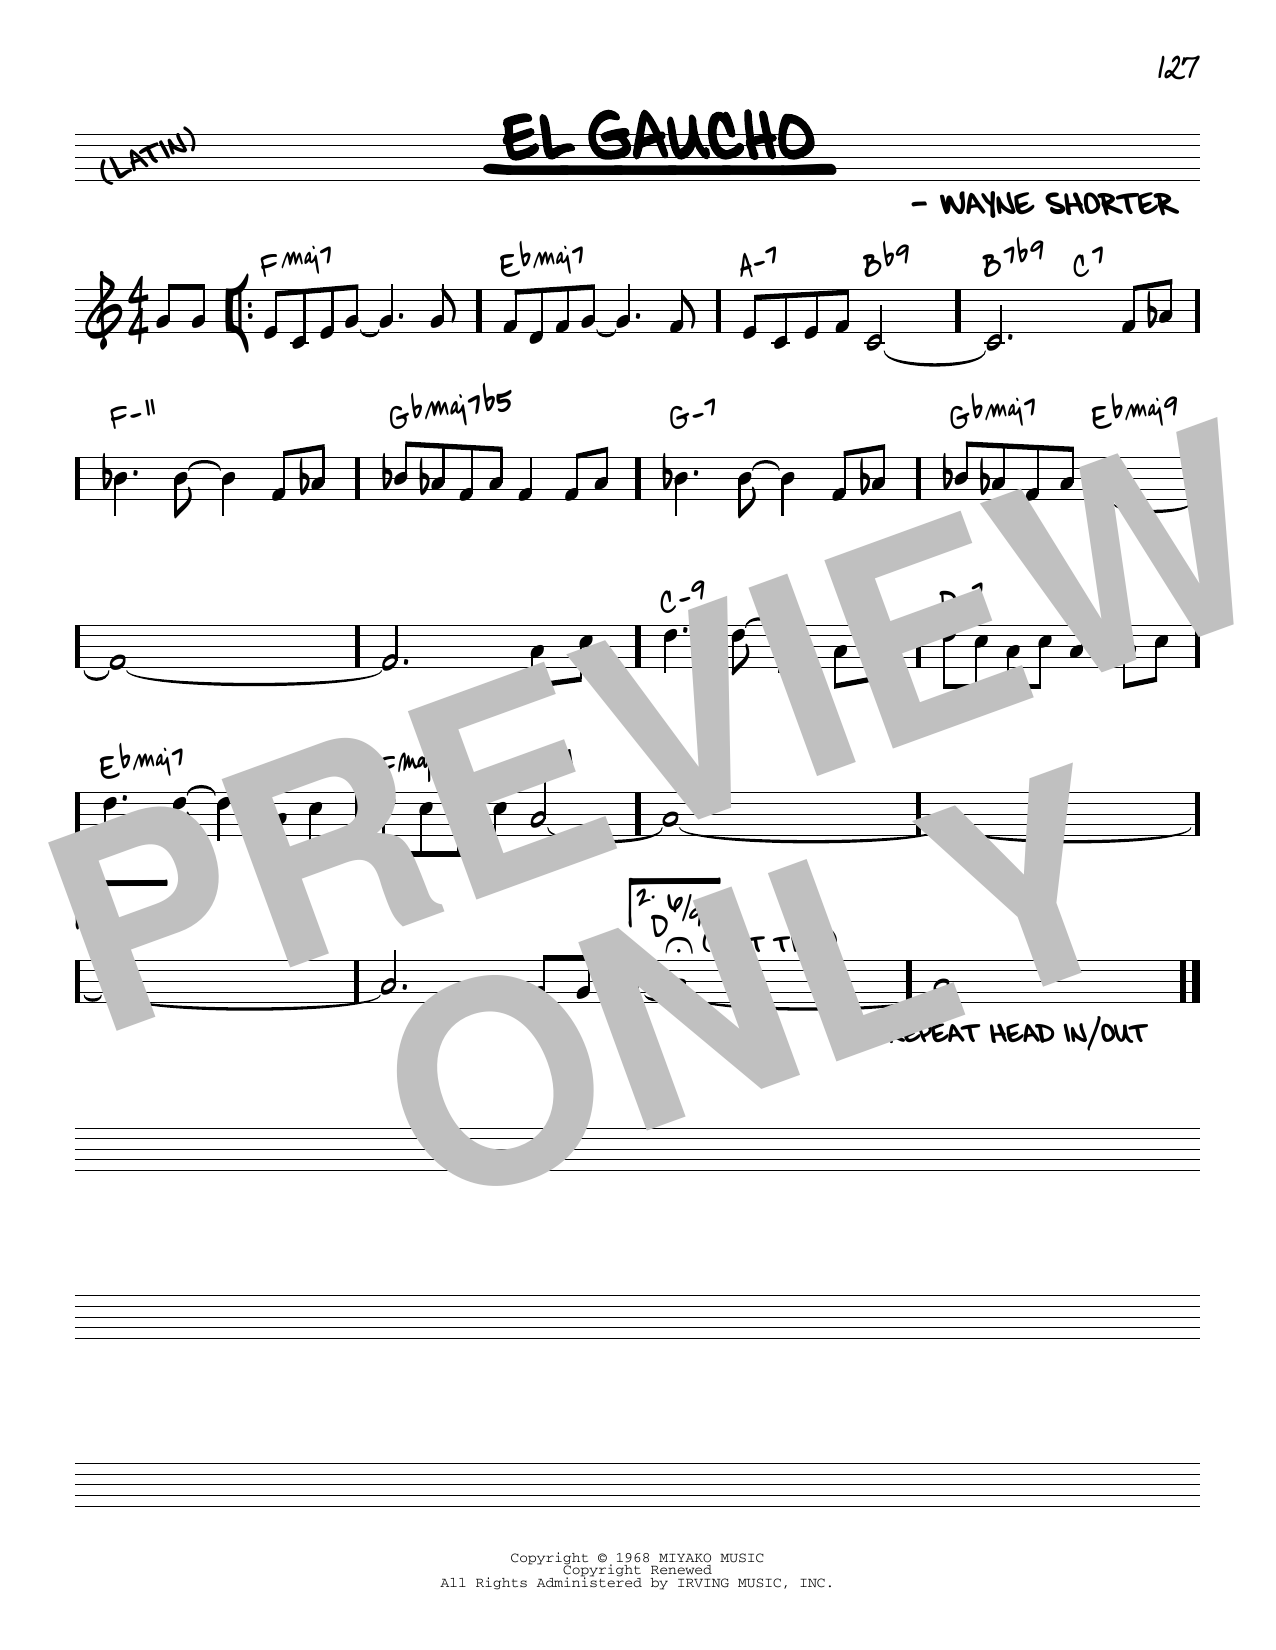 Download Wayne Shorter El Gaucho [Reharmonized version] (arr. Sheet Music